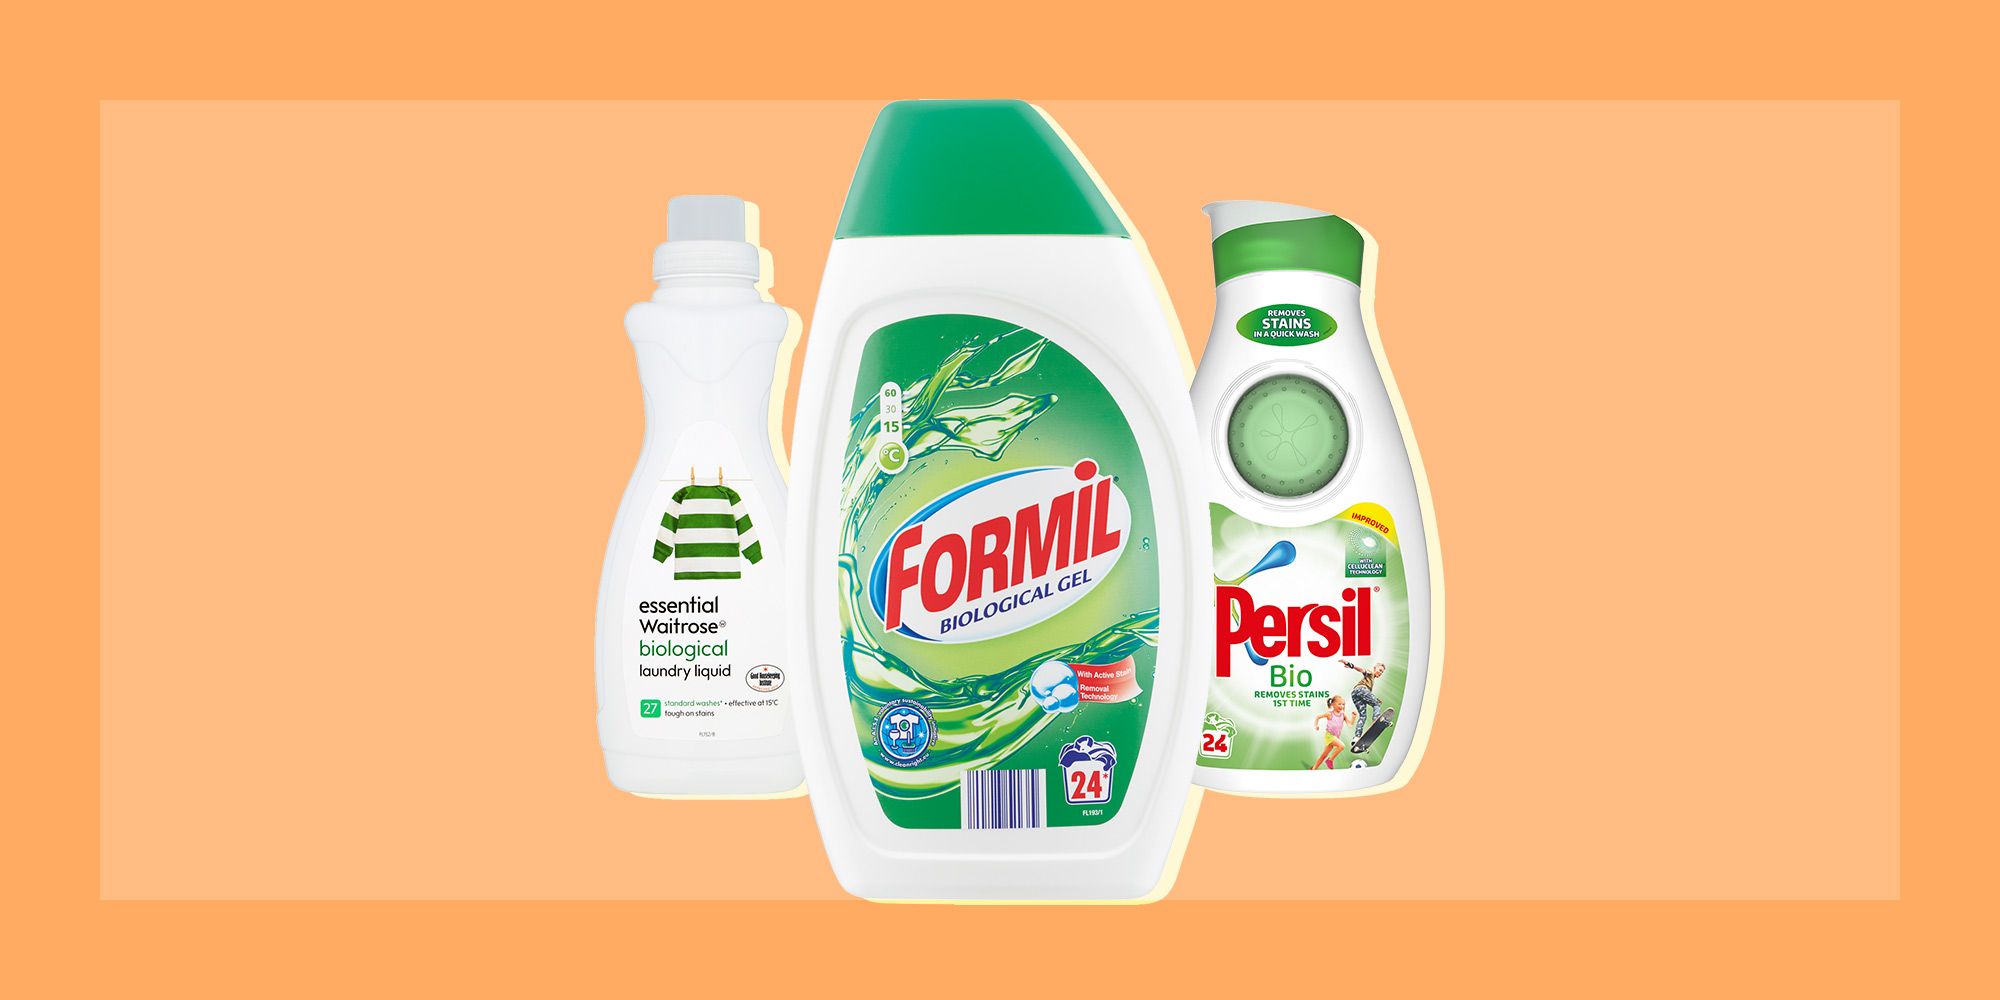 american detergent brands